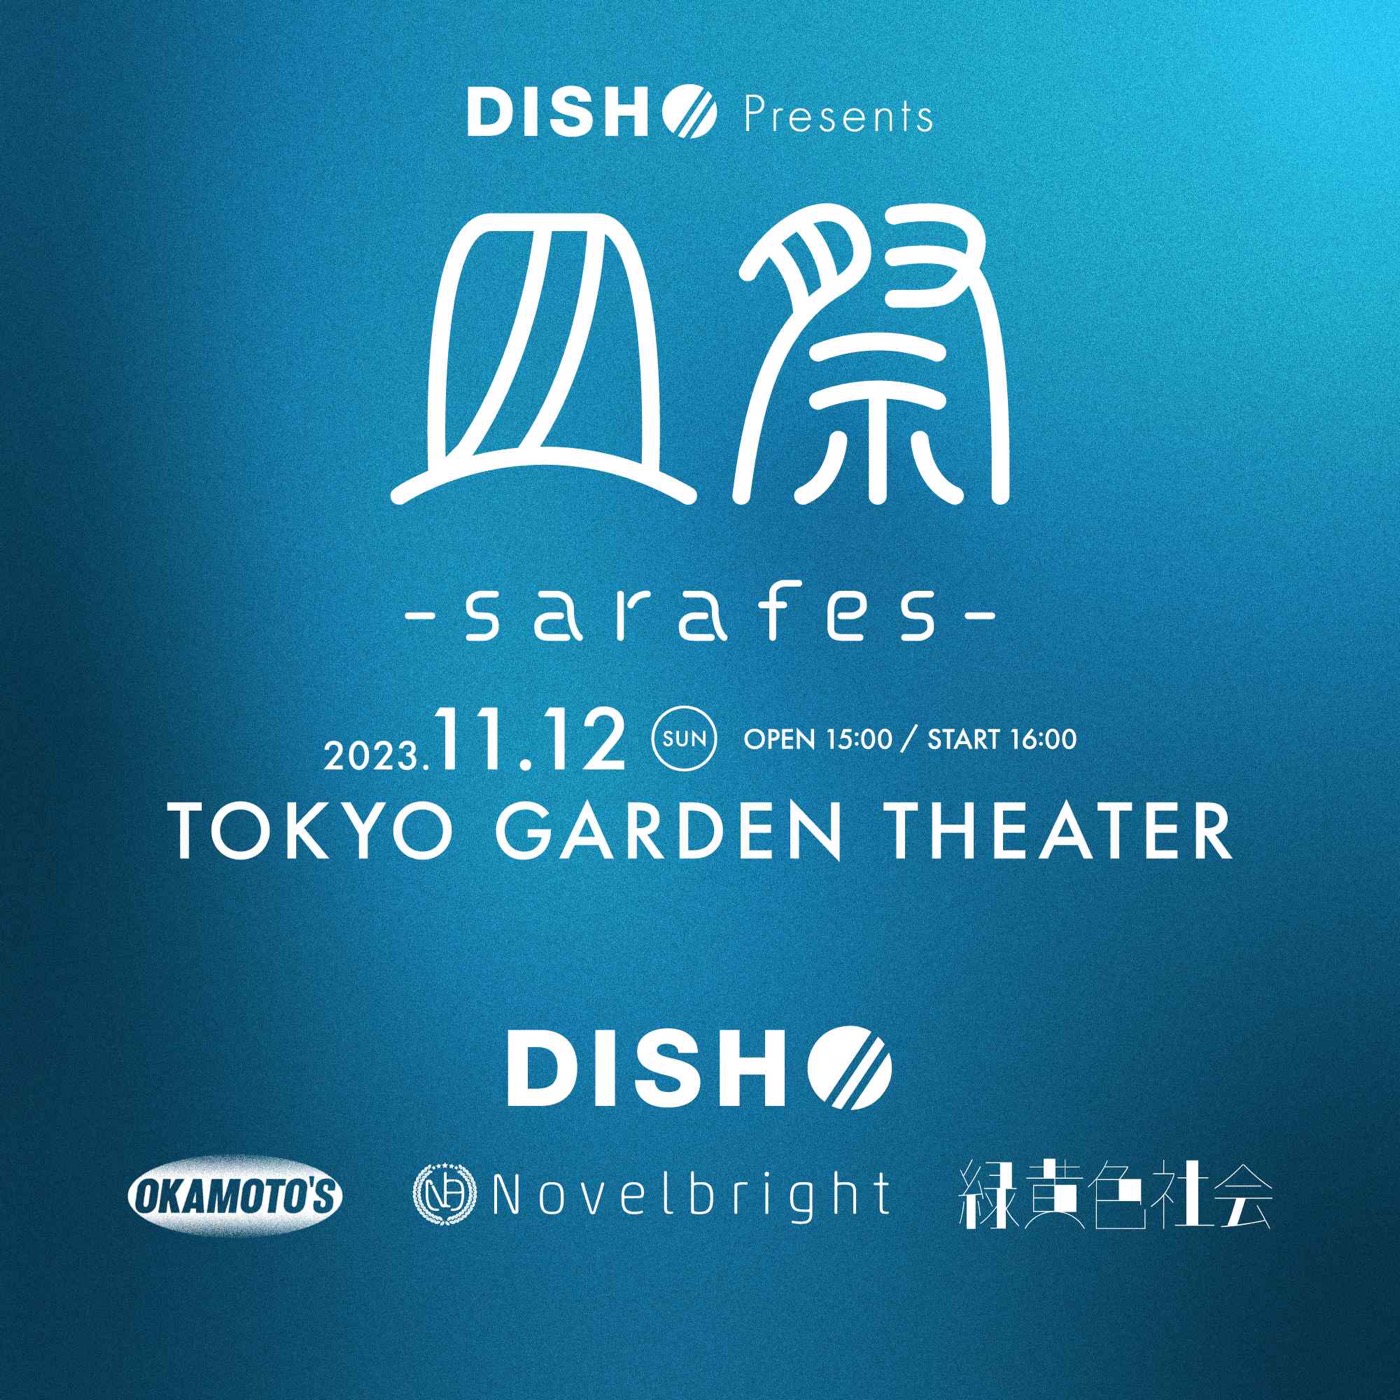 DISH//初主催『皿祭 -sara fes-』にOKAMOTO’S、Novelbright、緑黄色社会が出演決定 - 画像一覧（1/4）